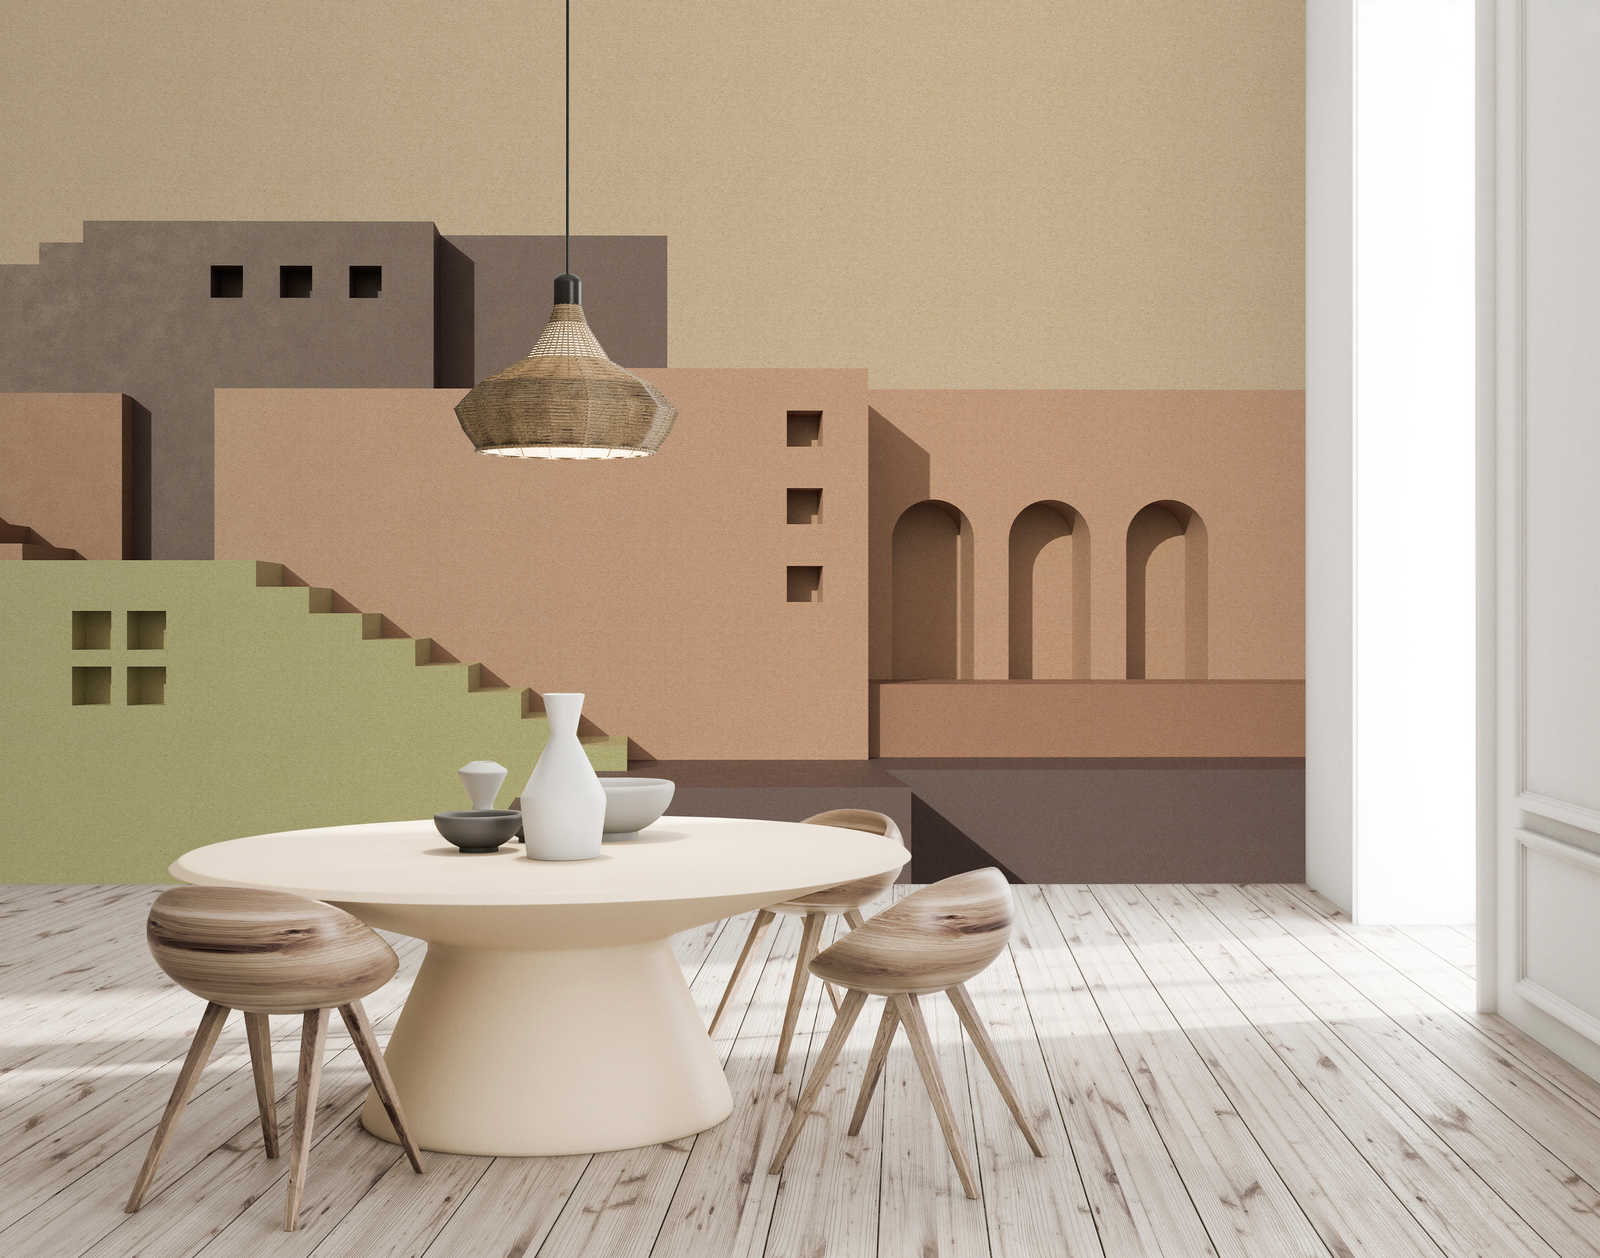             Tanger 2 - papier peint architecture dessert design abstrait
        